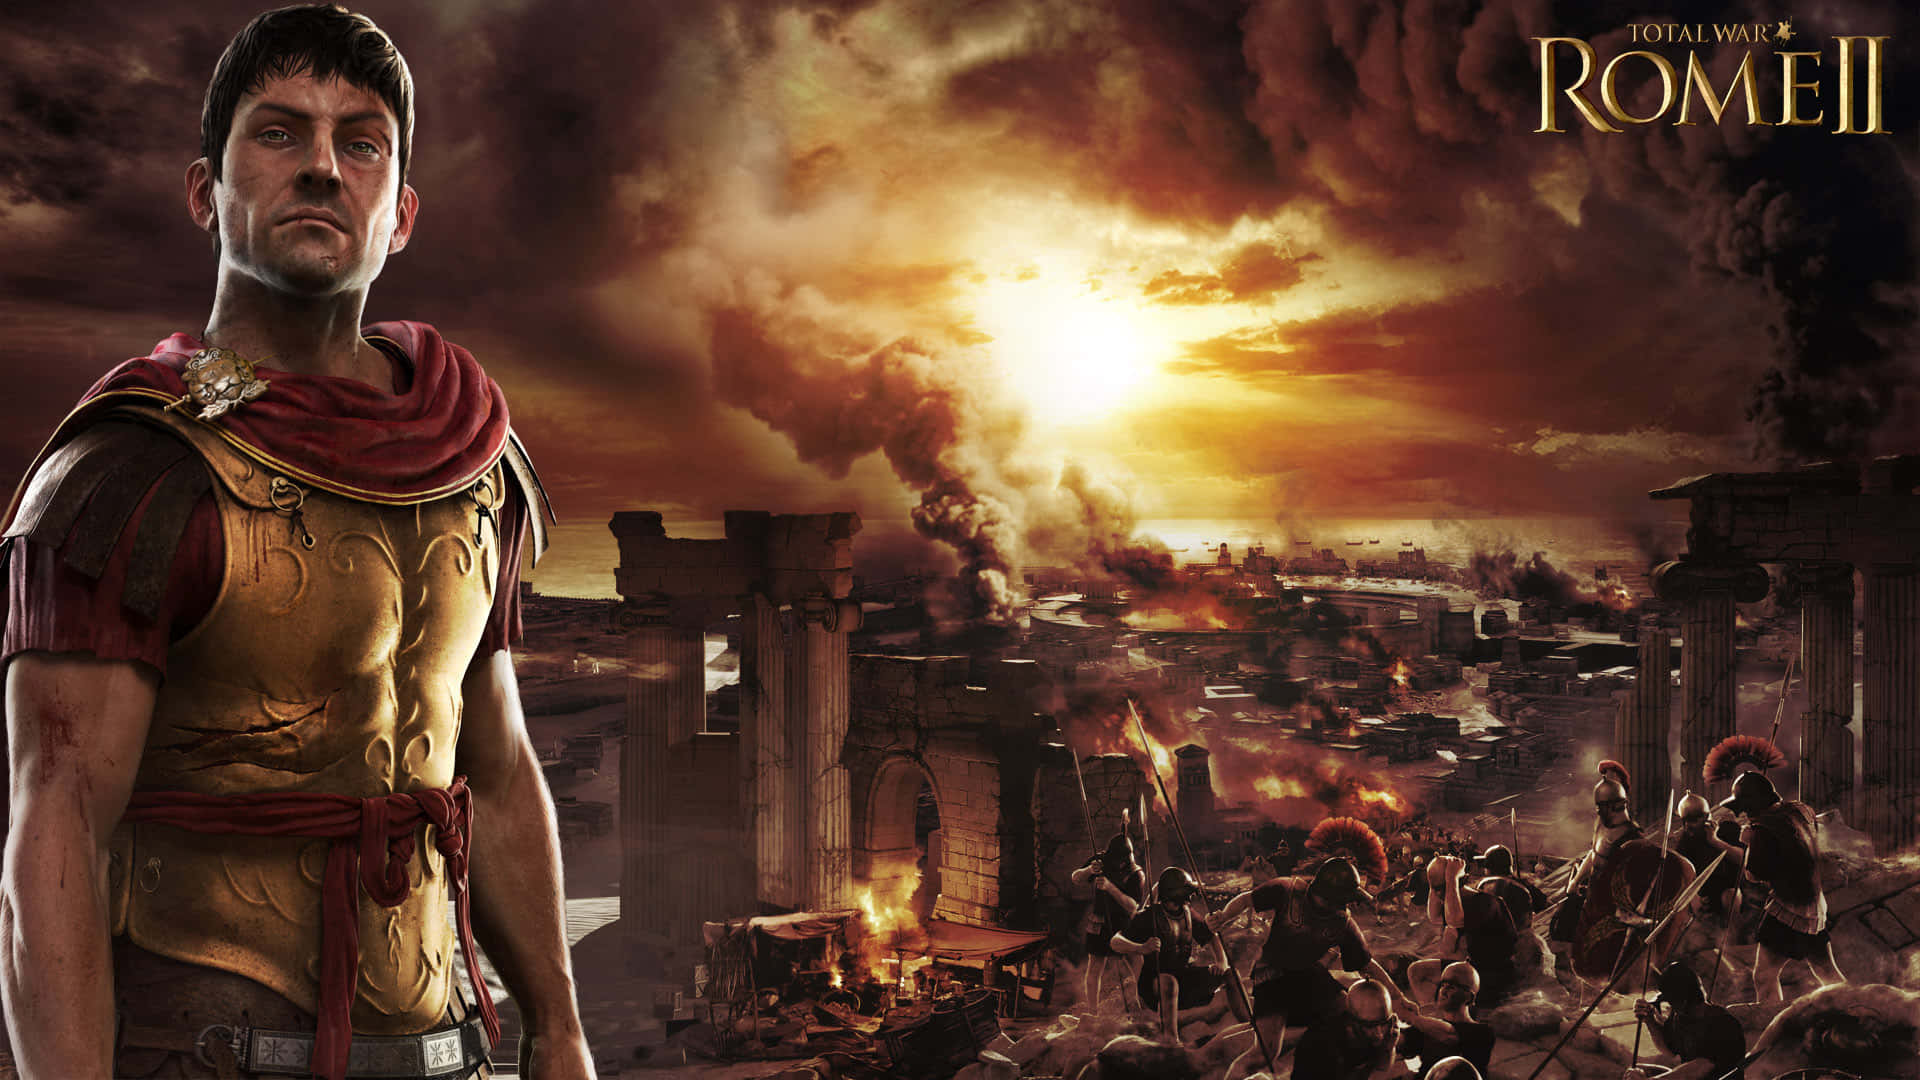 Best Total War Rome 2 Background Burning 1920 x 1080 Background